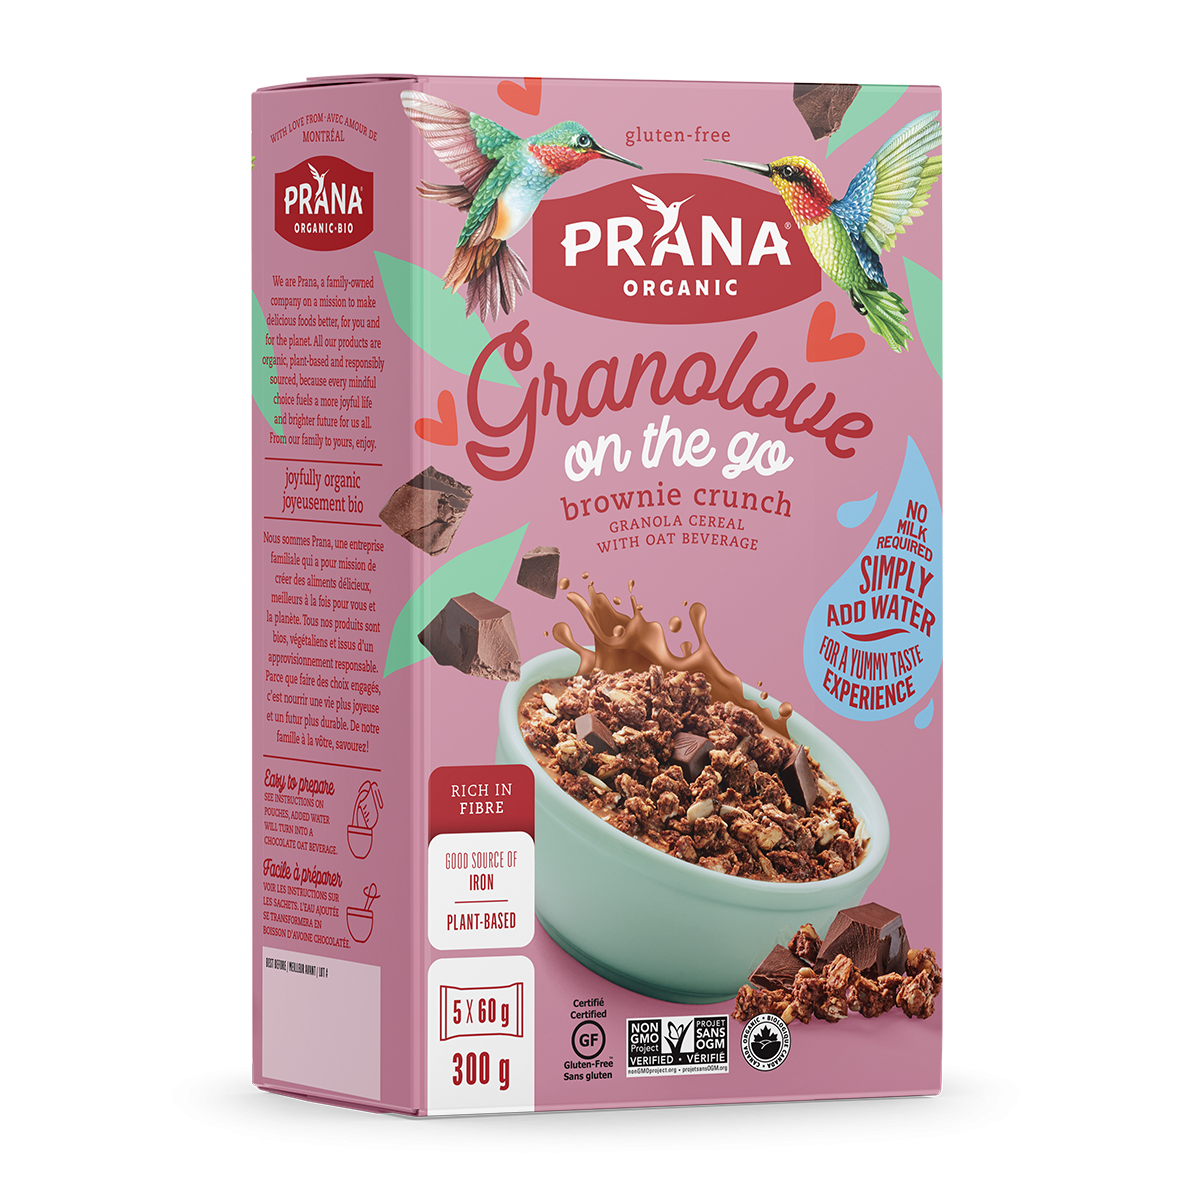 Prana Granolove On the Go 300 g / Brownie Crunch